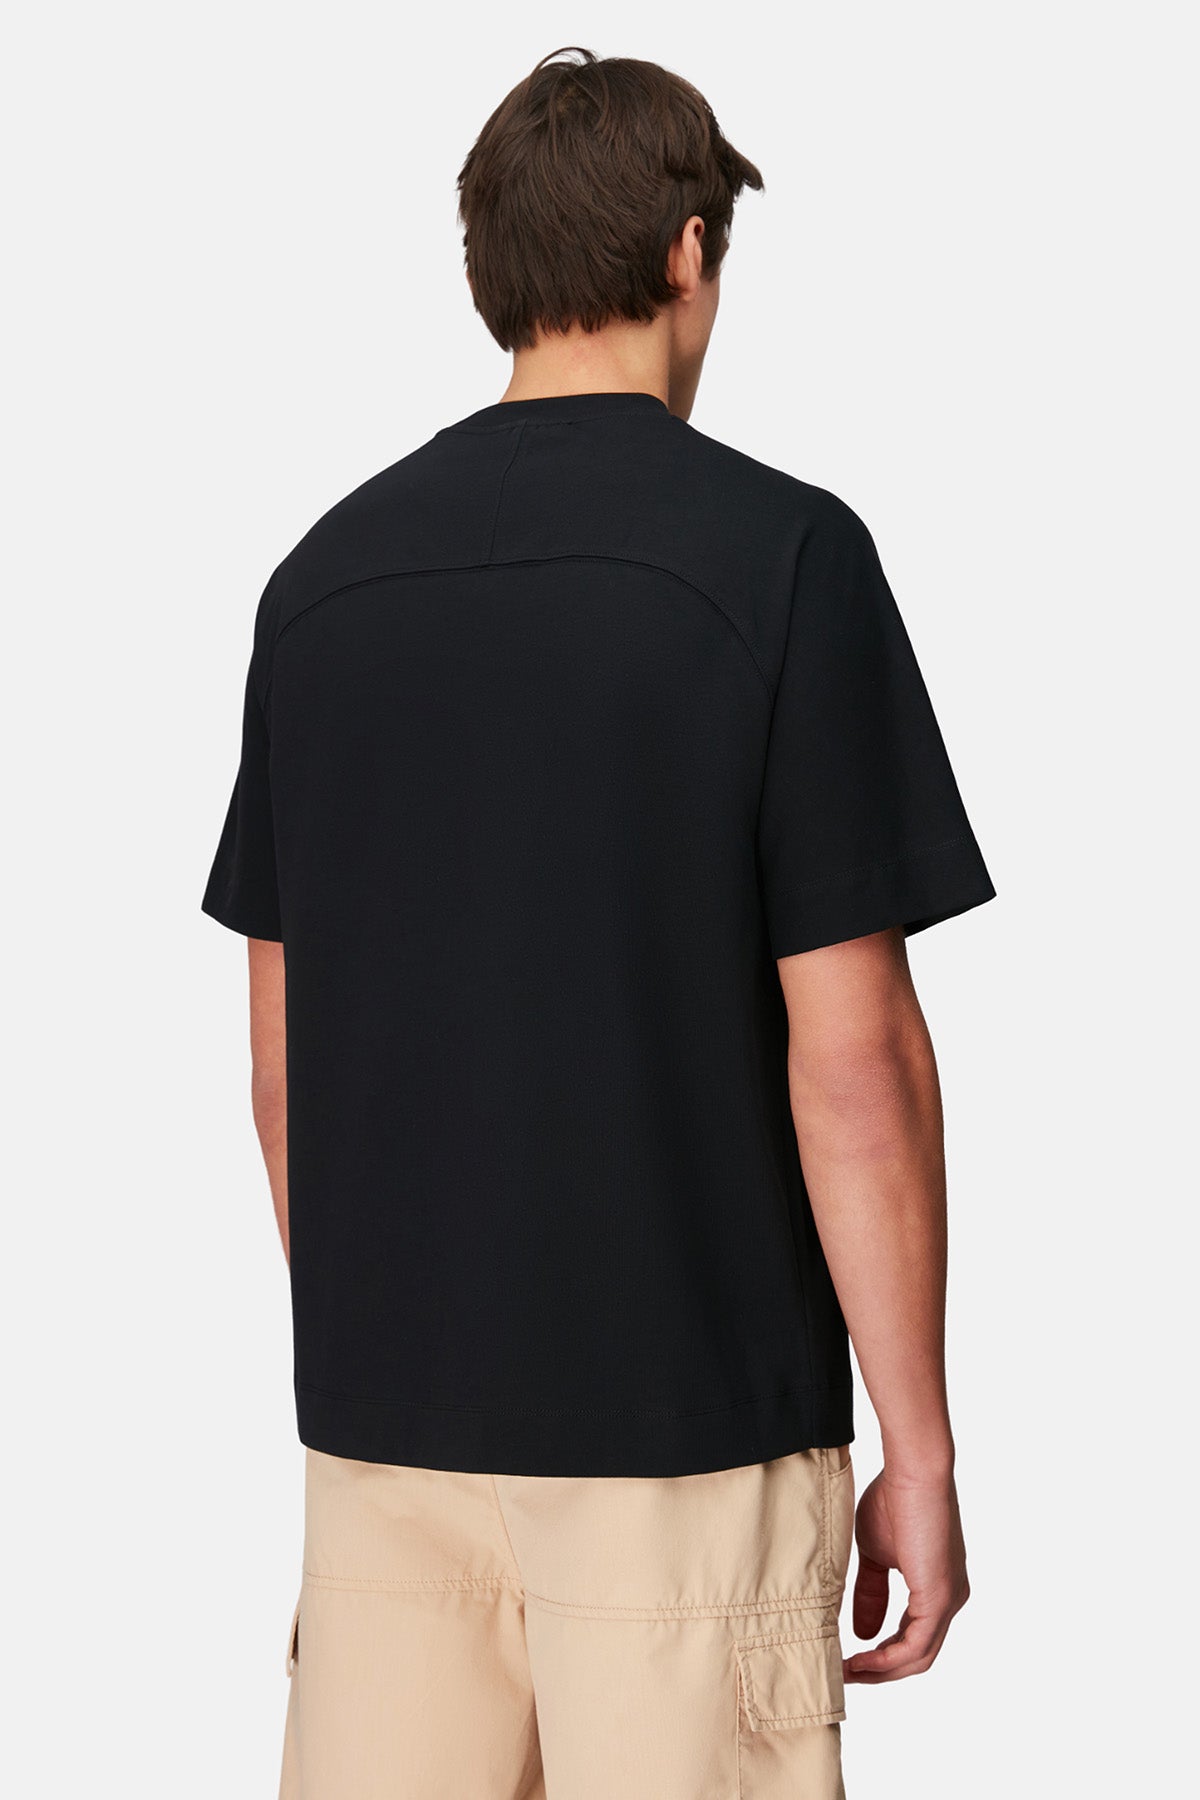 Logo Tag Premium T-Shirt - Black